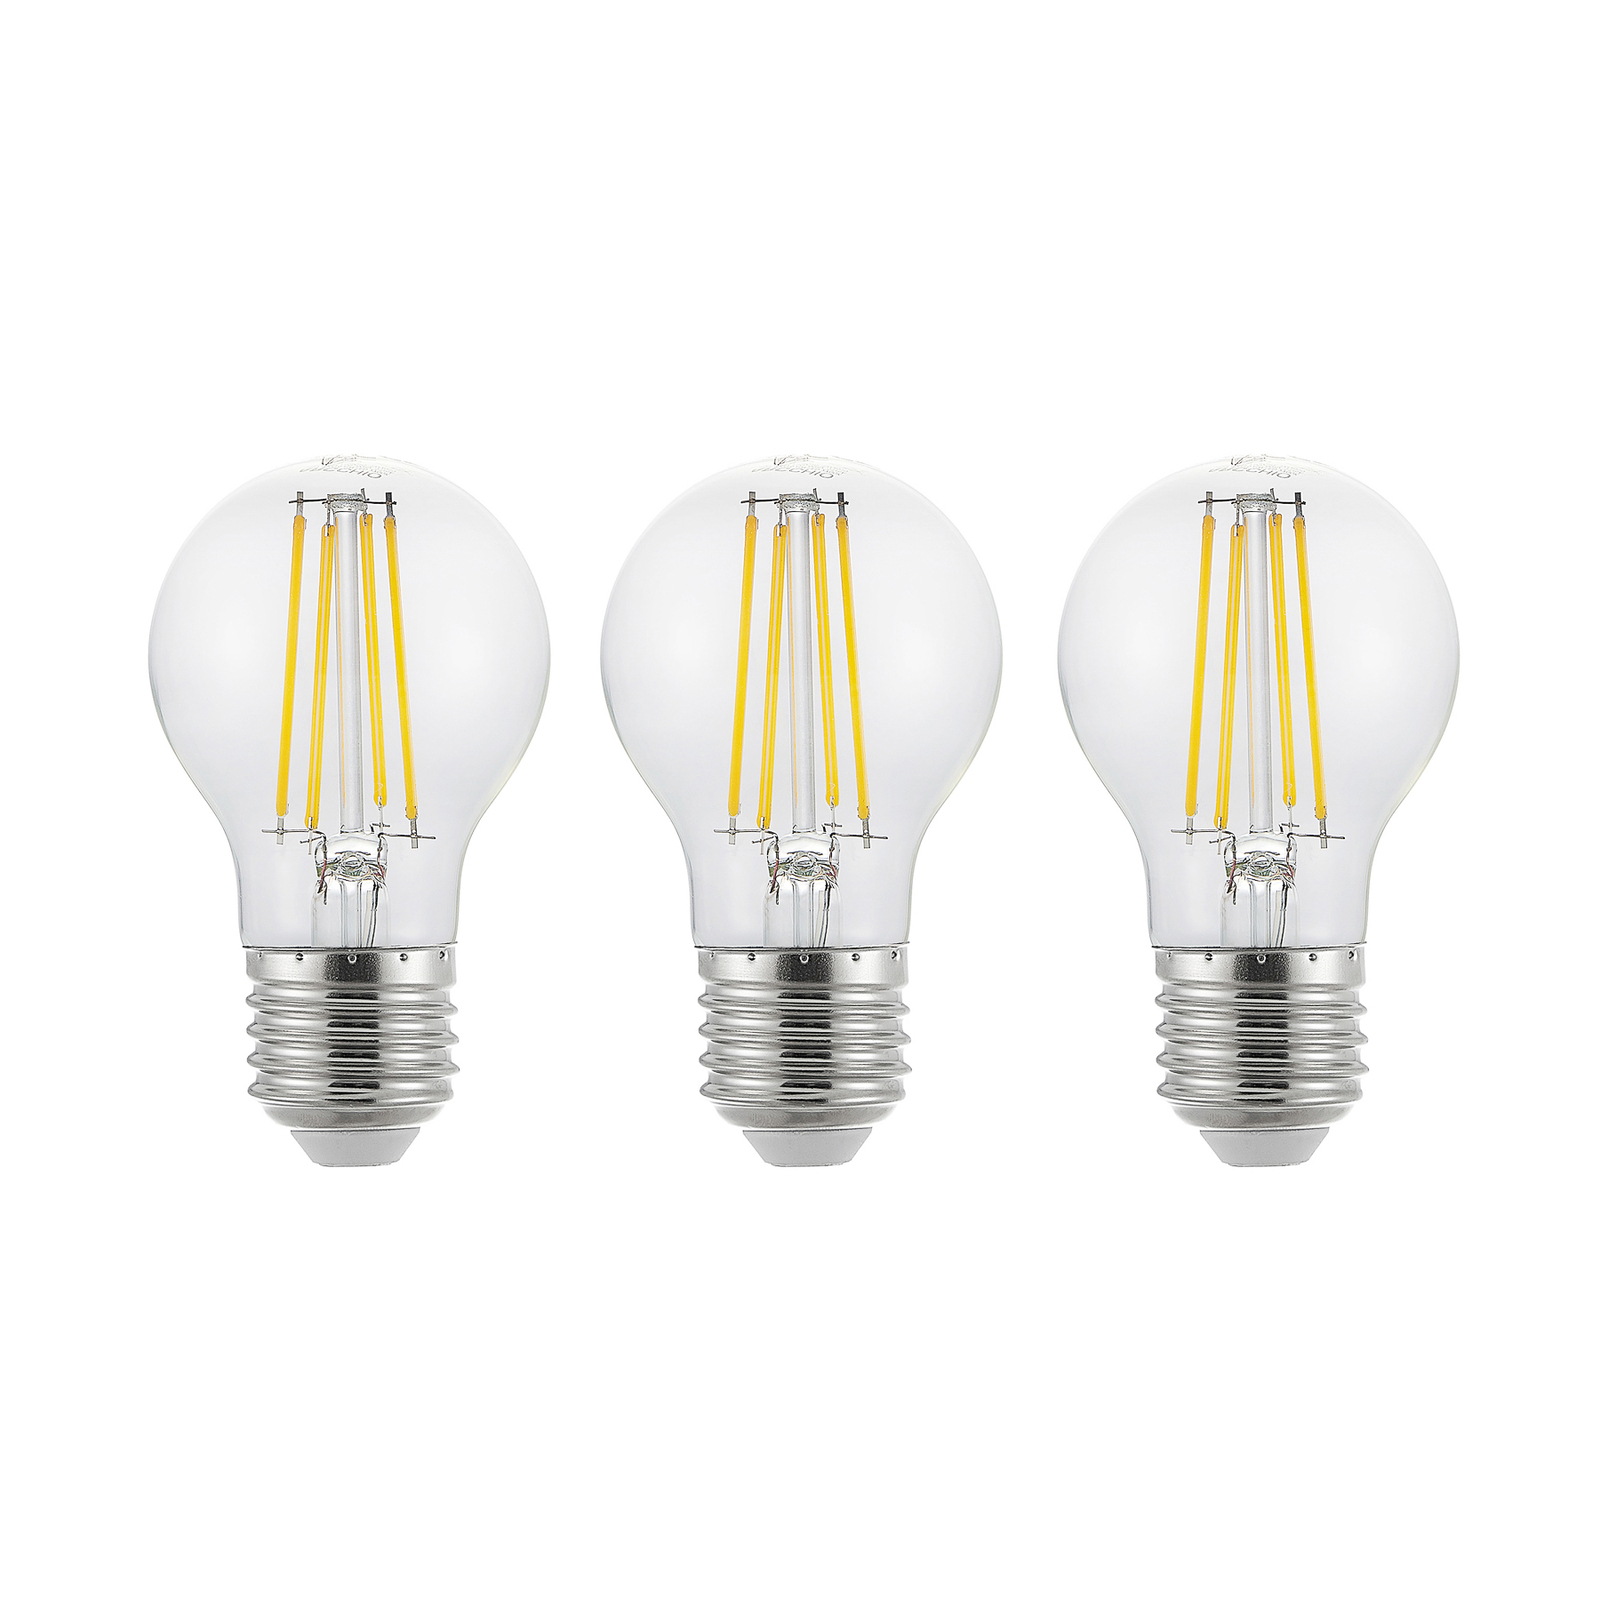 LED lamp E27 A60 6,5W 827 3-Step-dimmer 3 per set